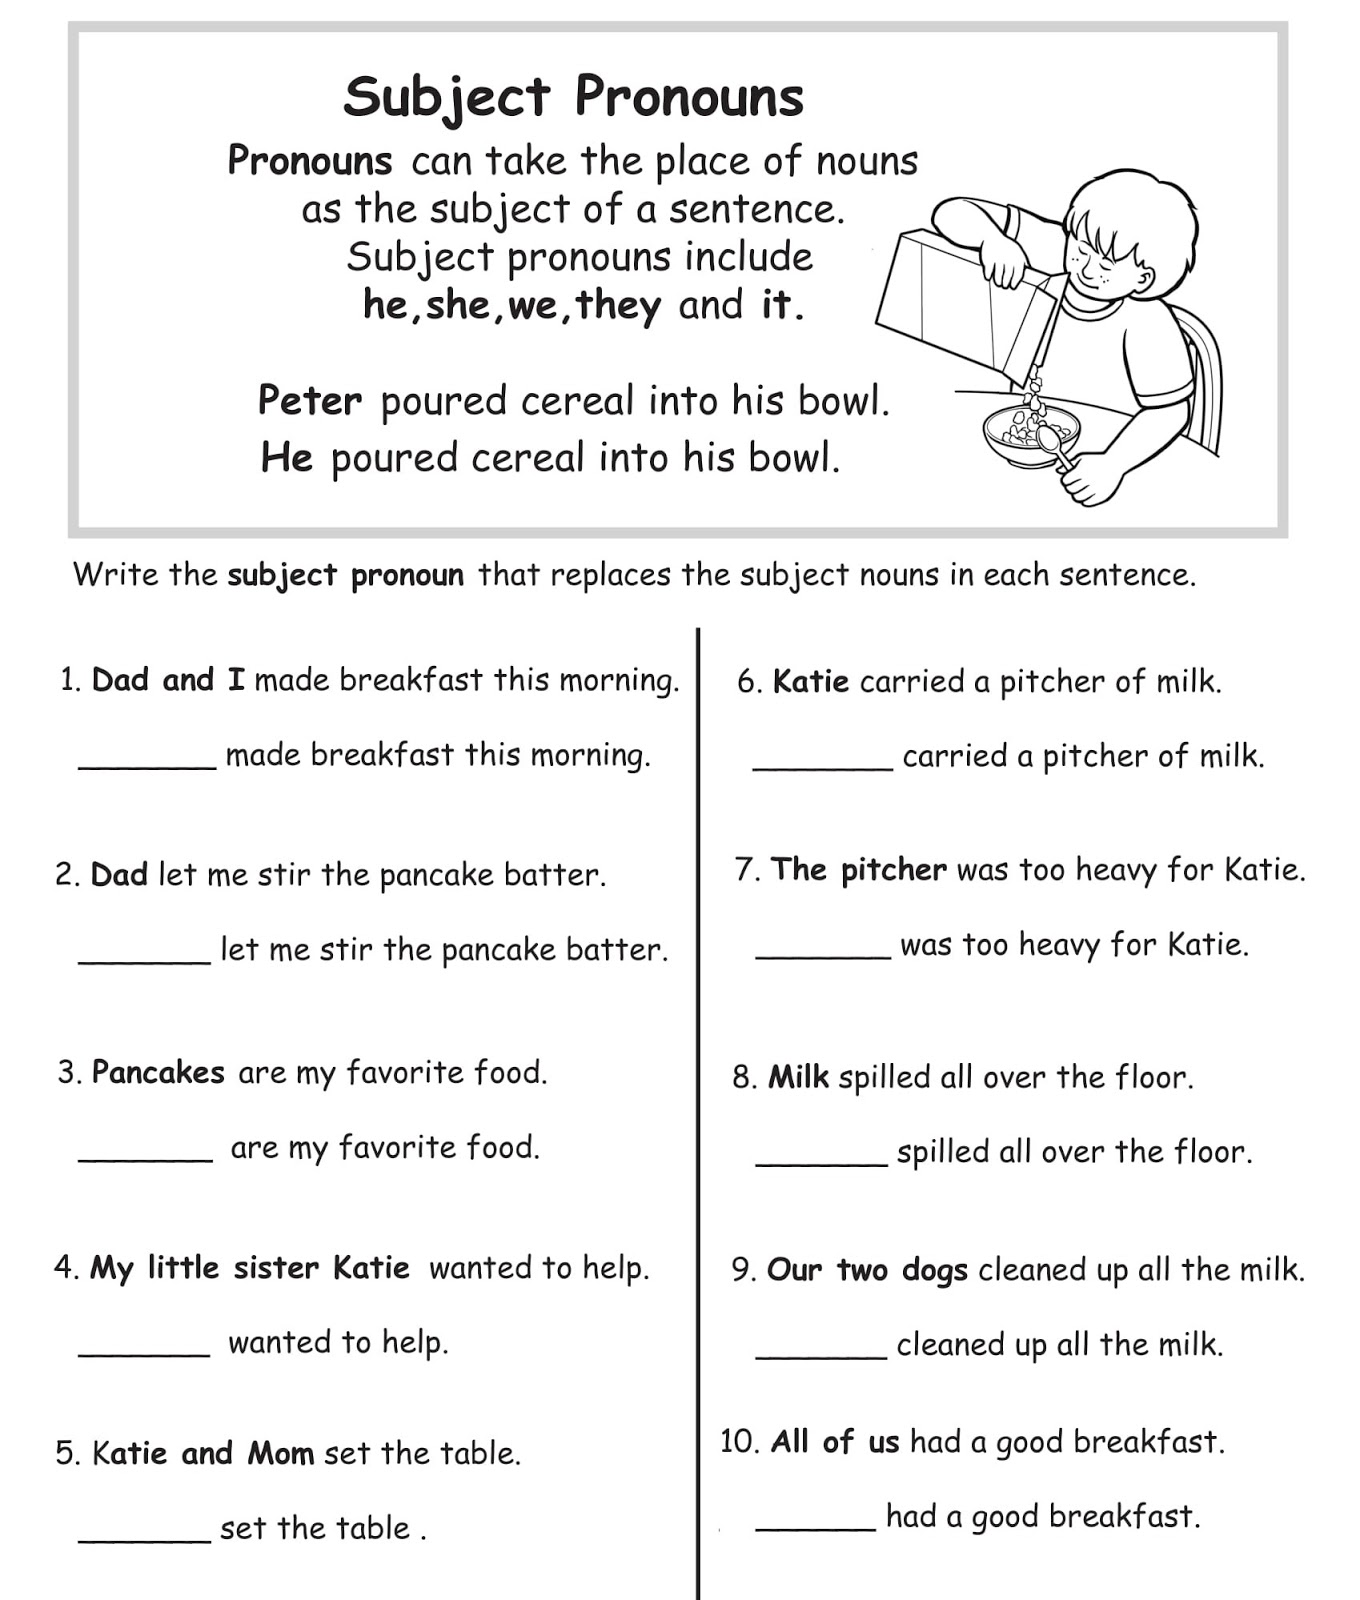 subject-pronouns-exercises-english-grammar-solution